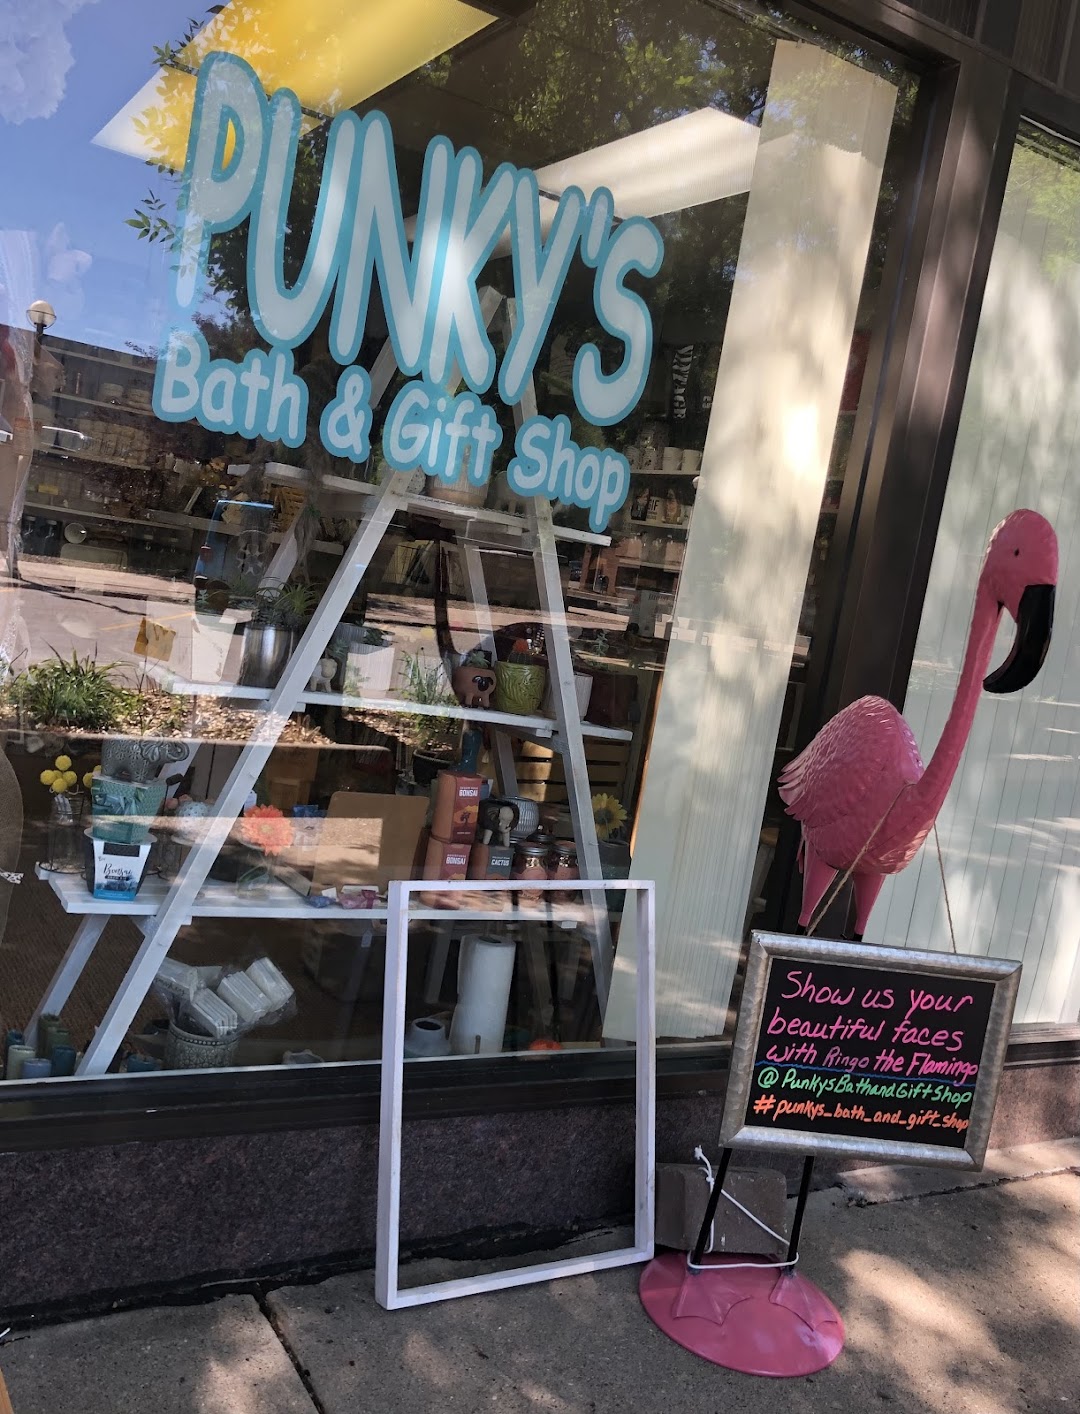 Punky’s Bath & Gift Shop